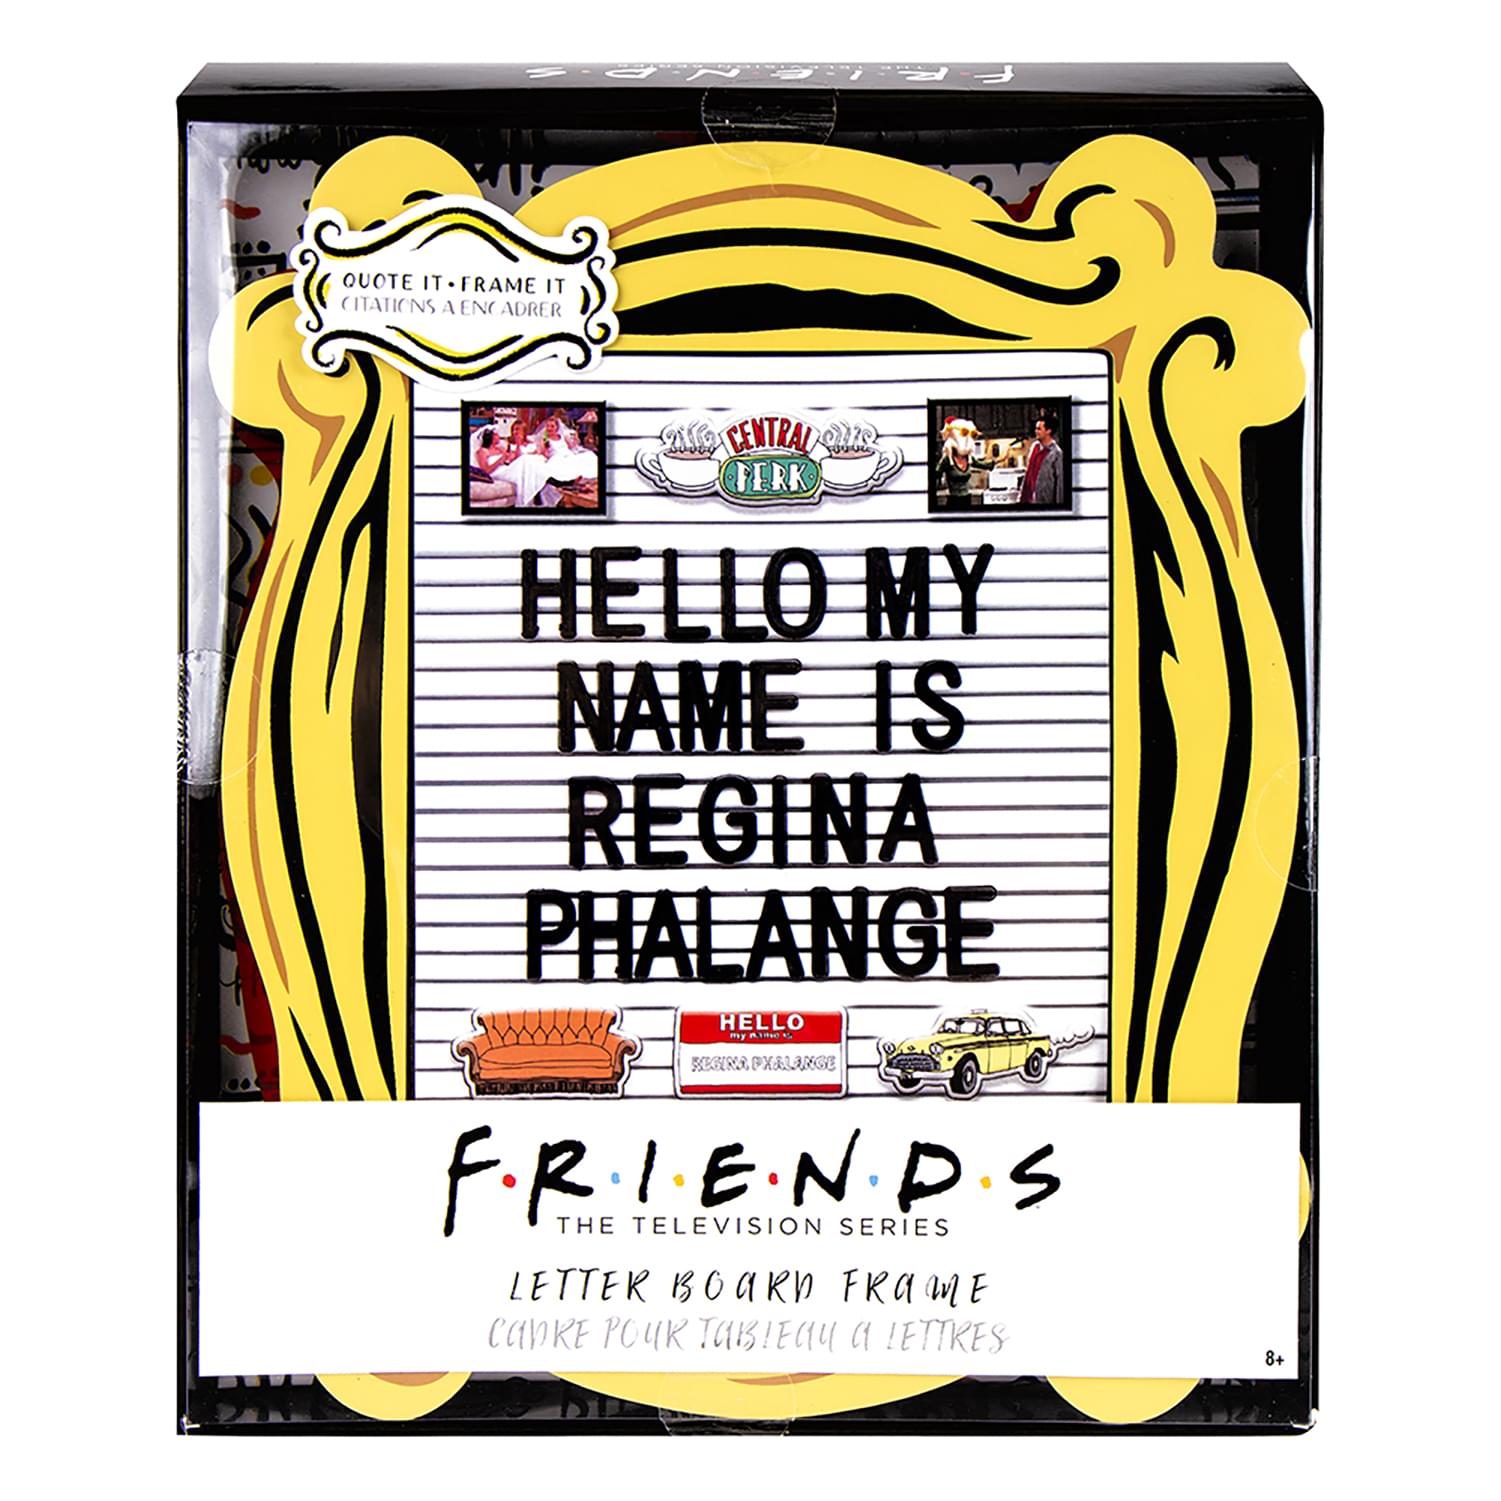 FRIENDS Letter Board Frame Kit